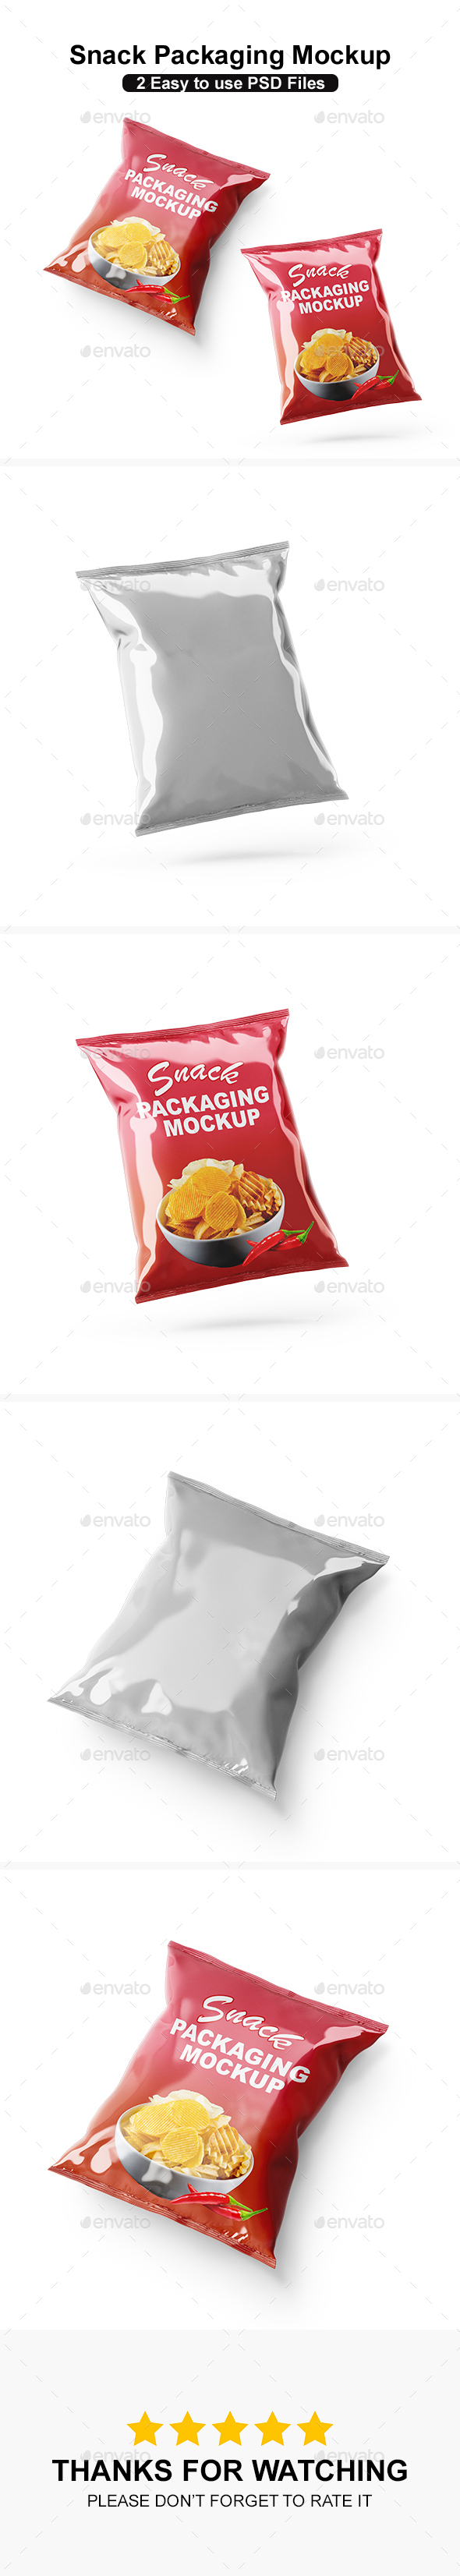 [DOWNLOAD]Snack Packaging Mockup